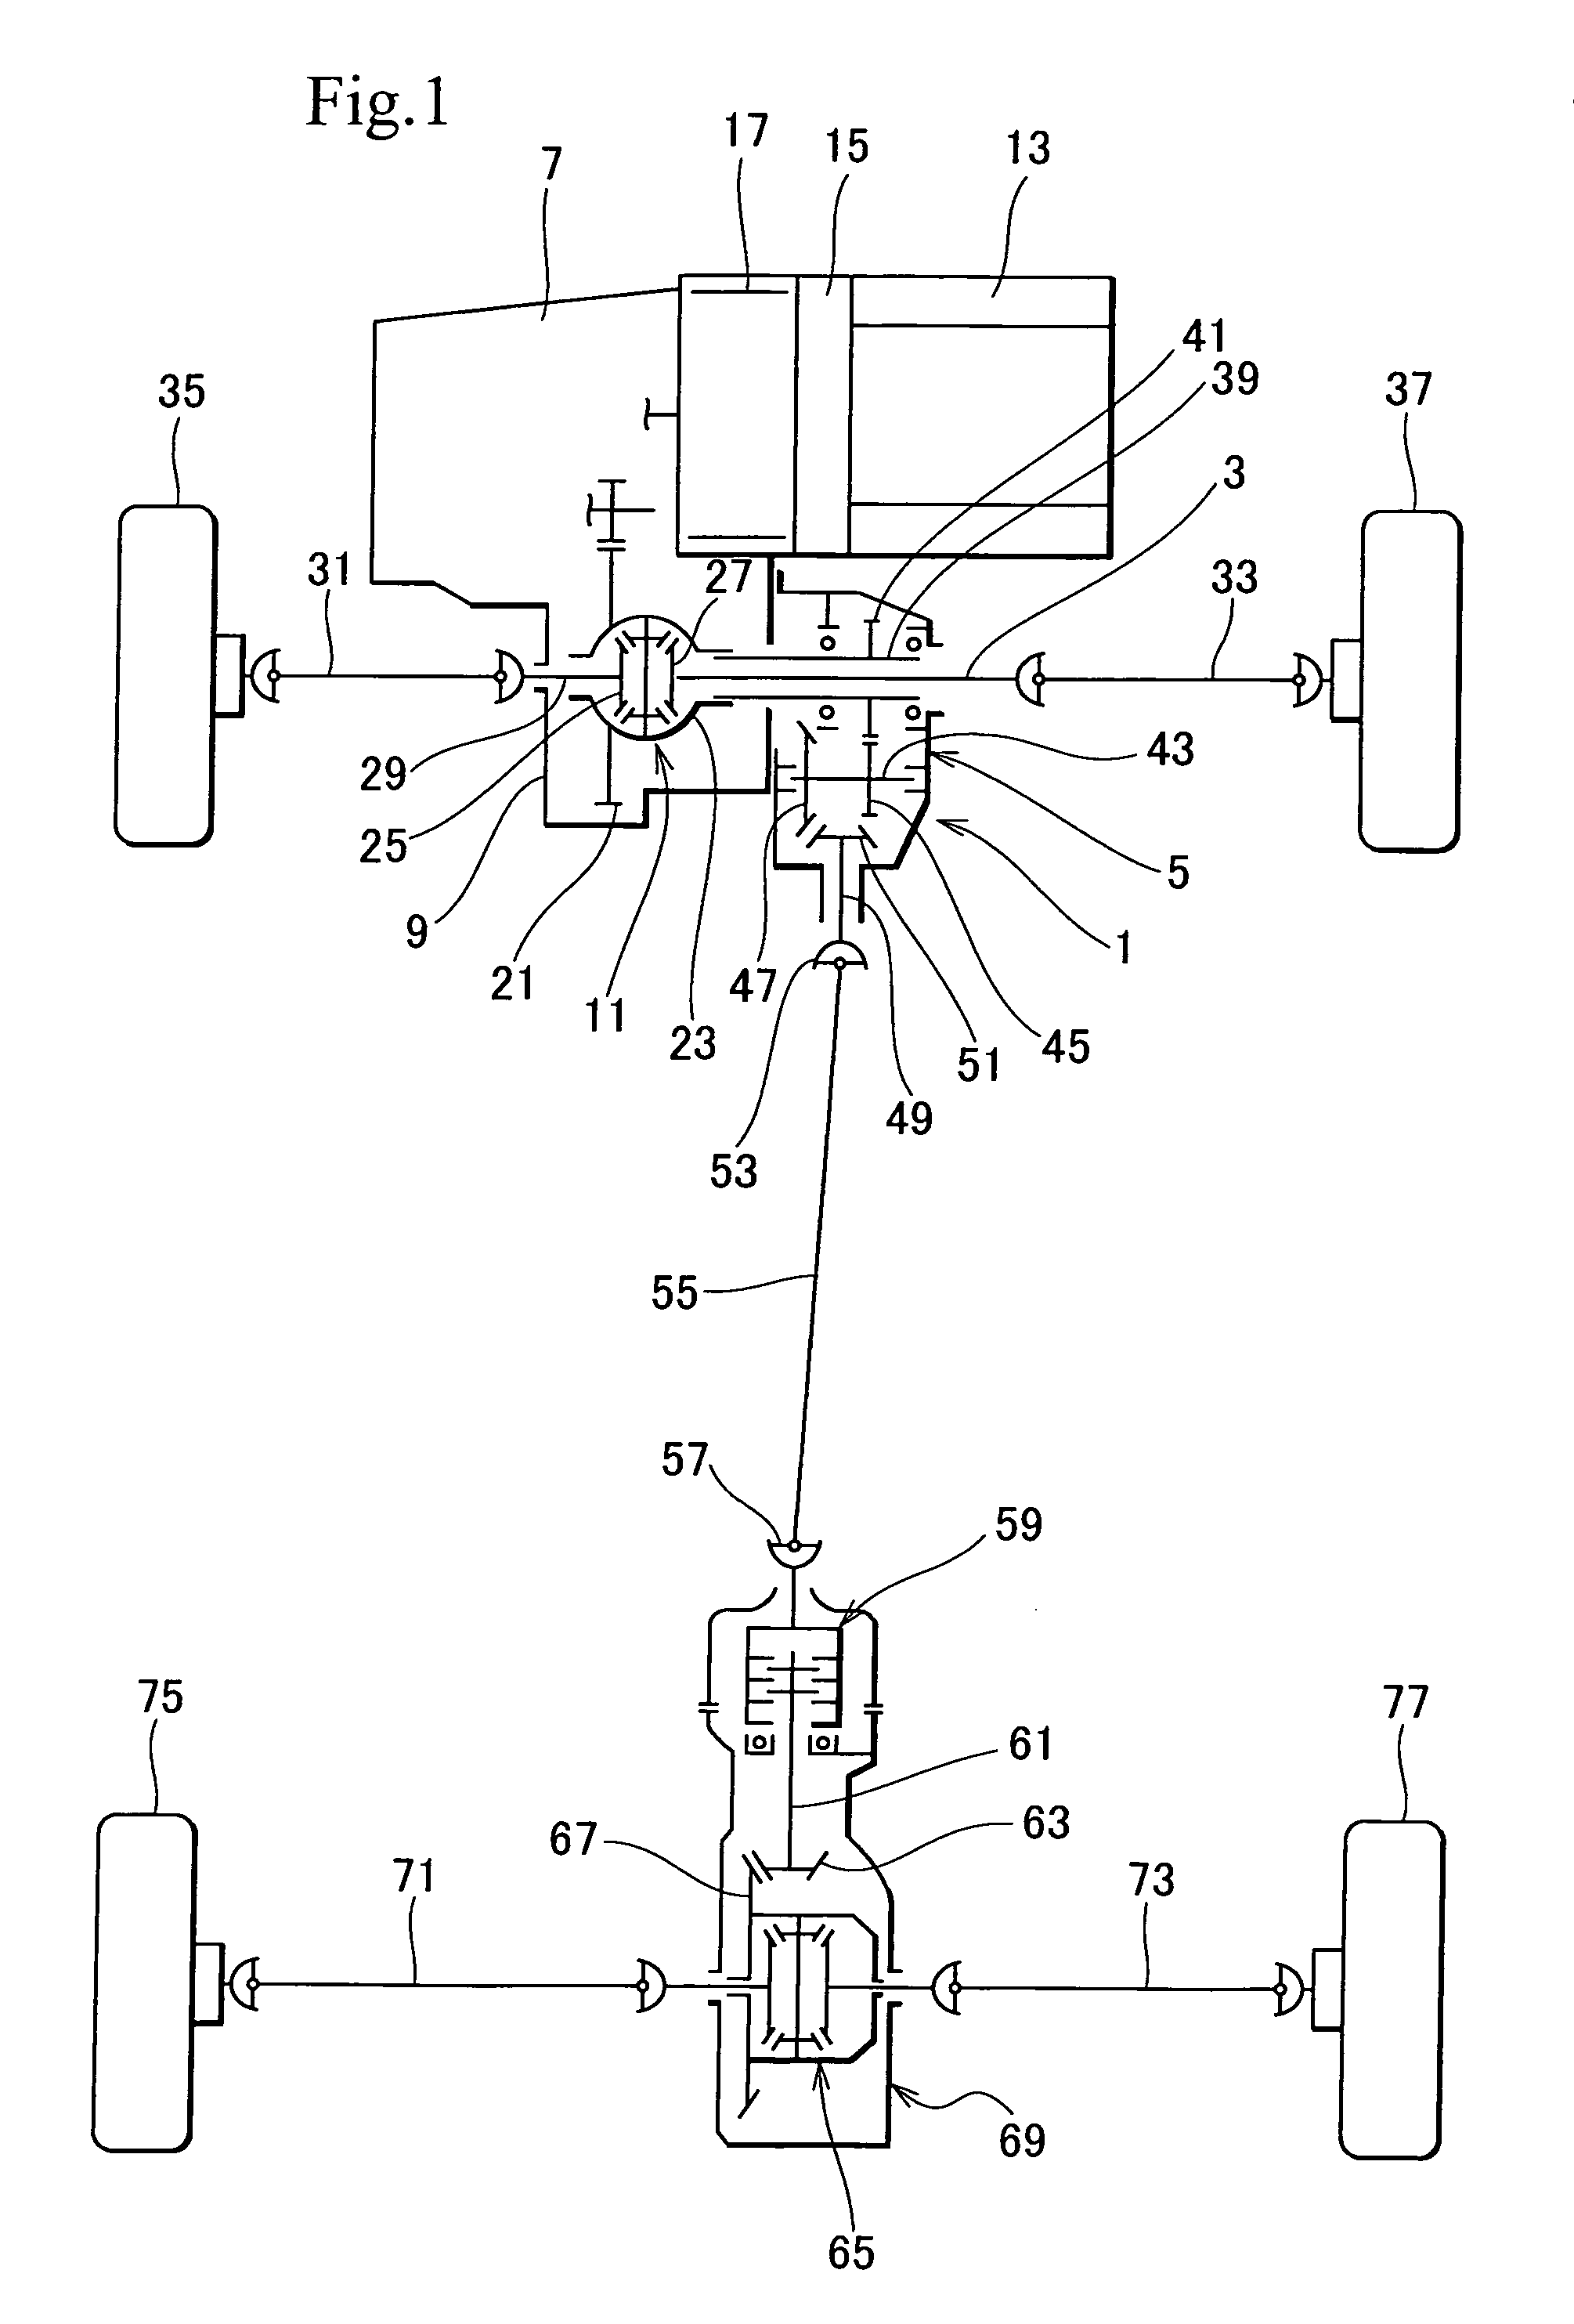 Power transmission apparatus